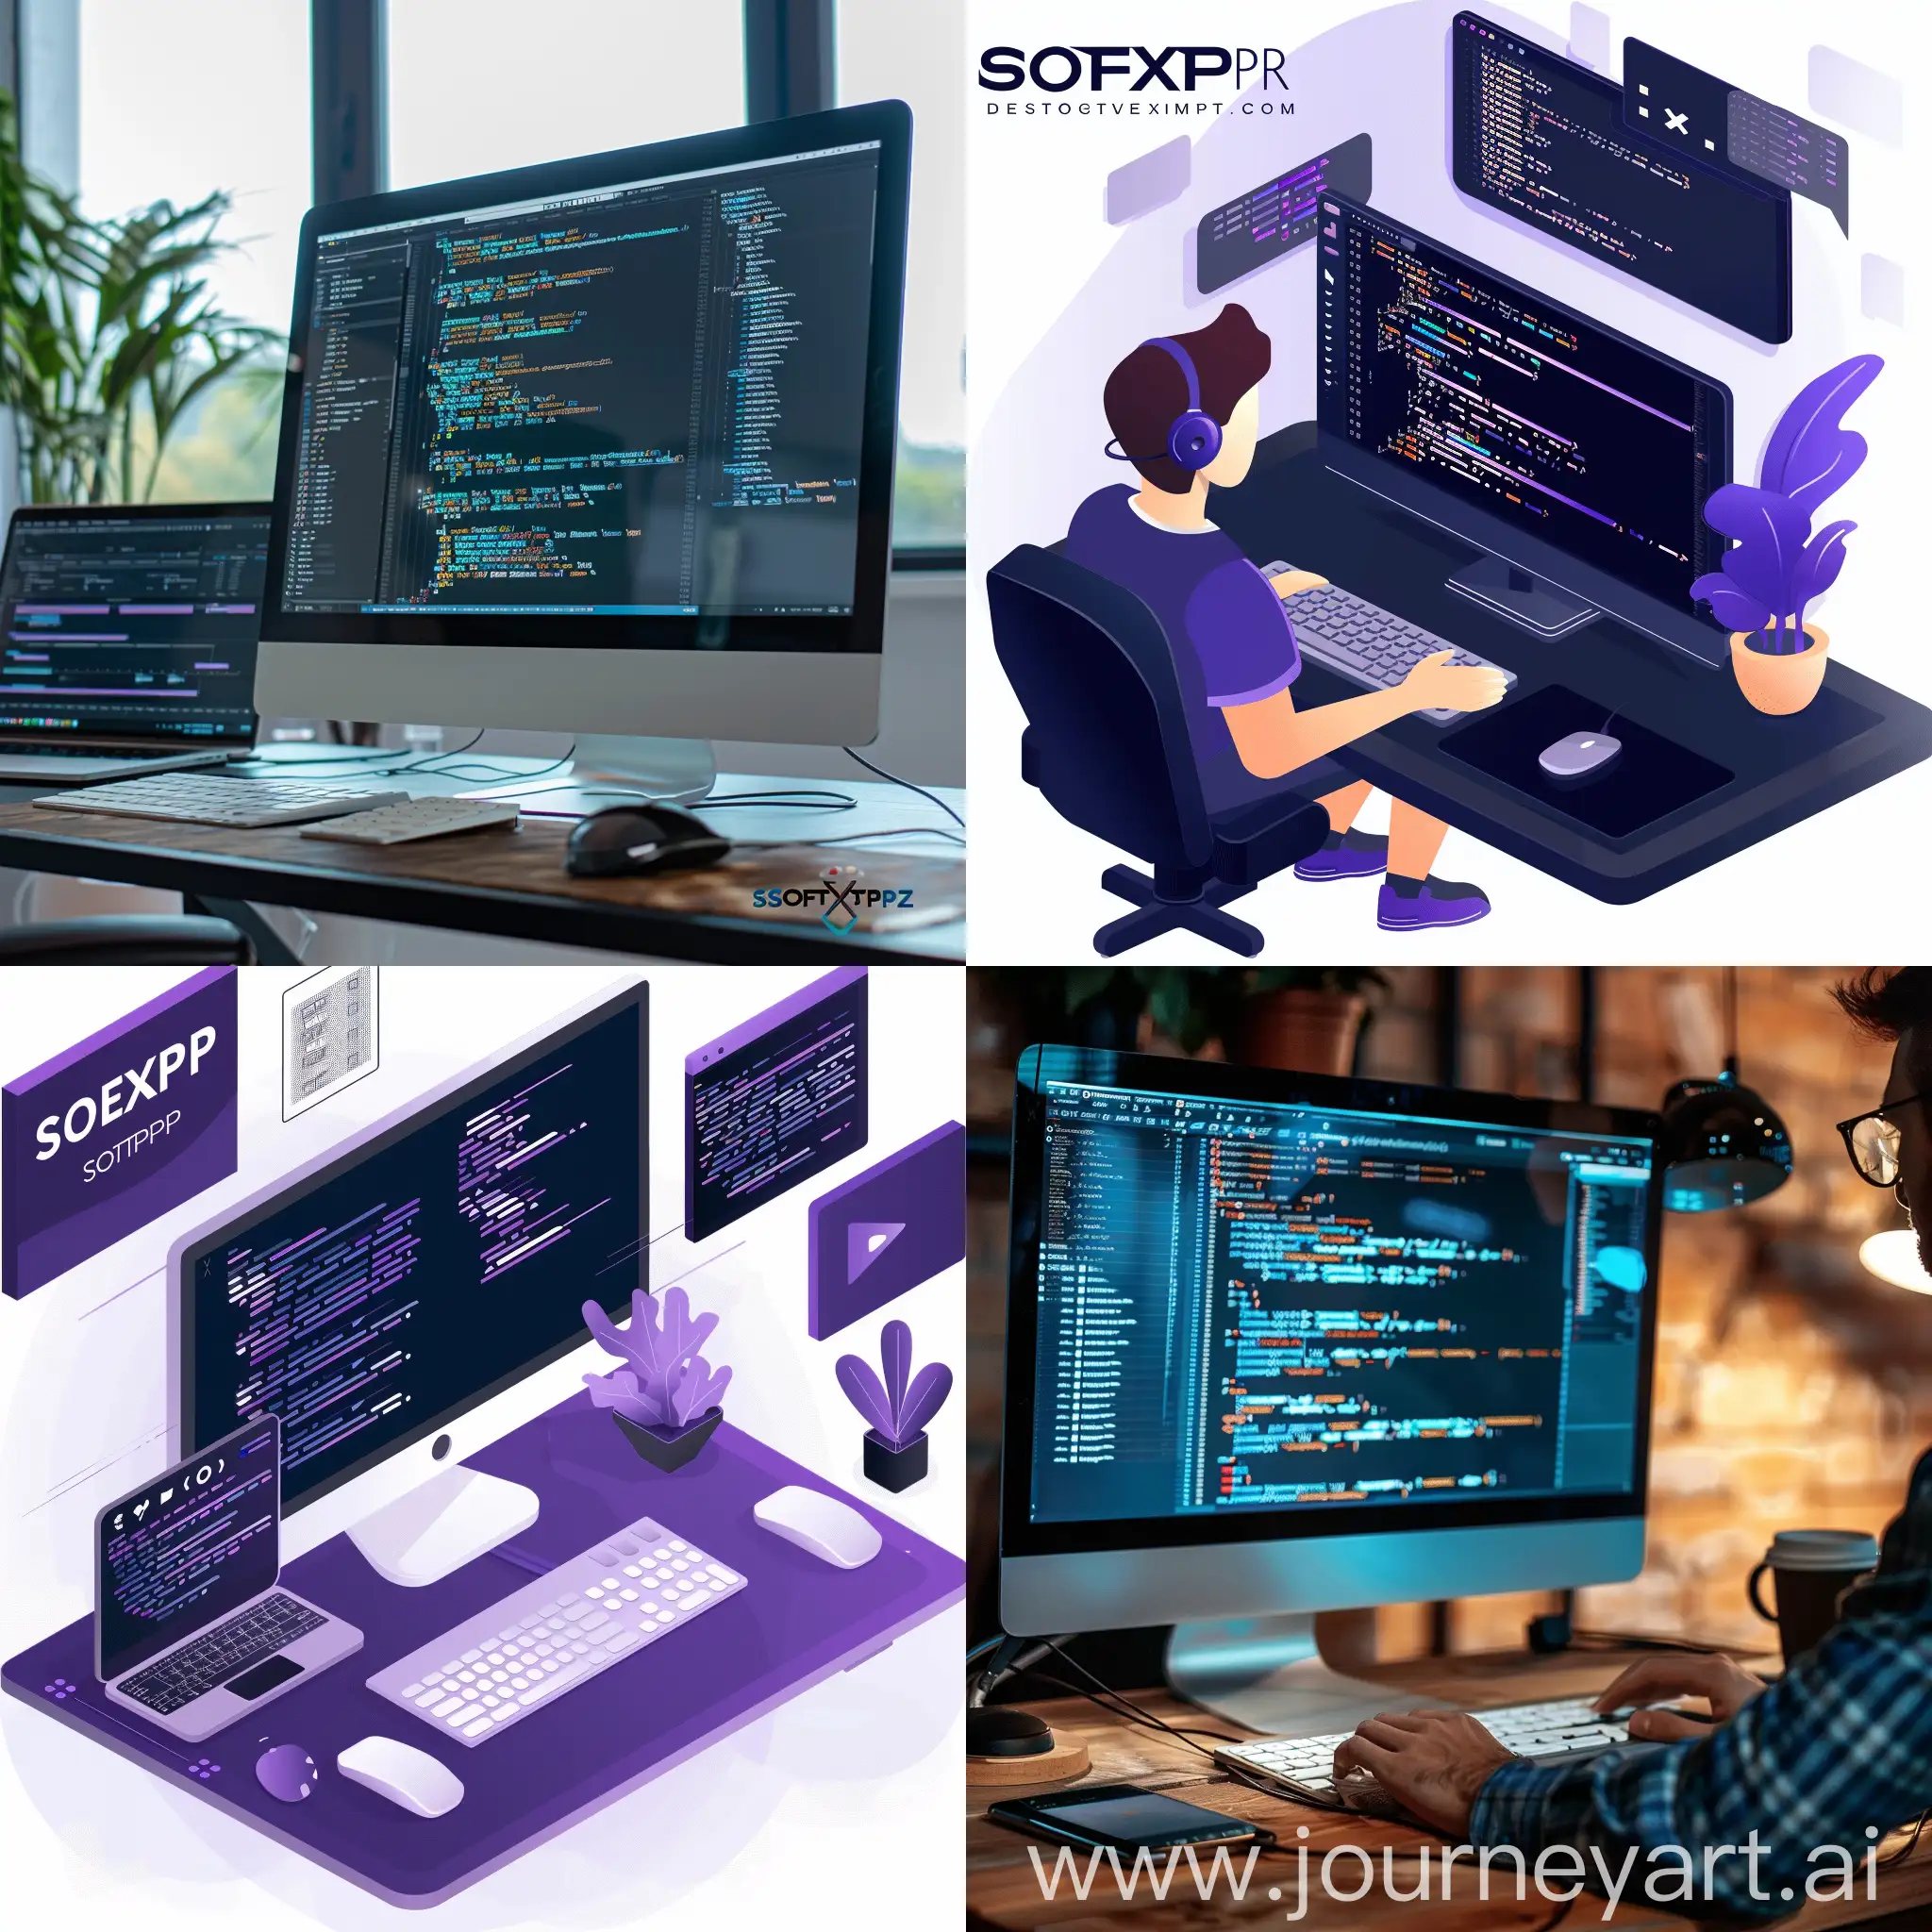 Software and web development company SoftXPro